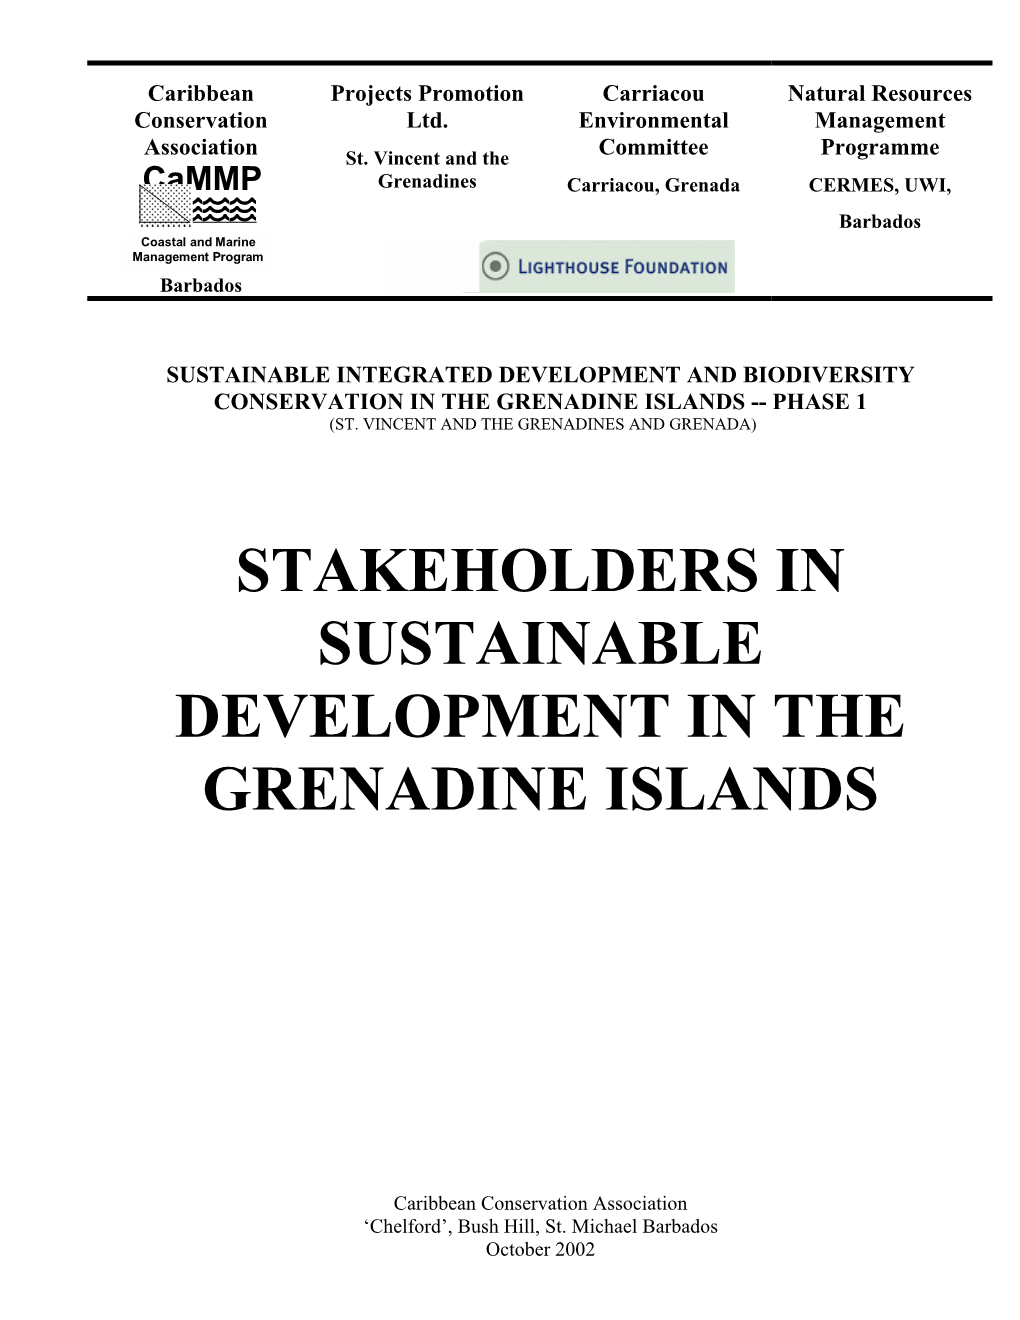 Stakeholders in Sustainable Development in the Grenadine Islands